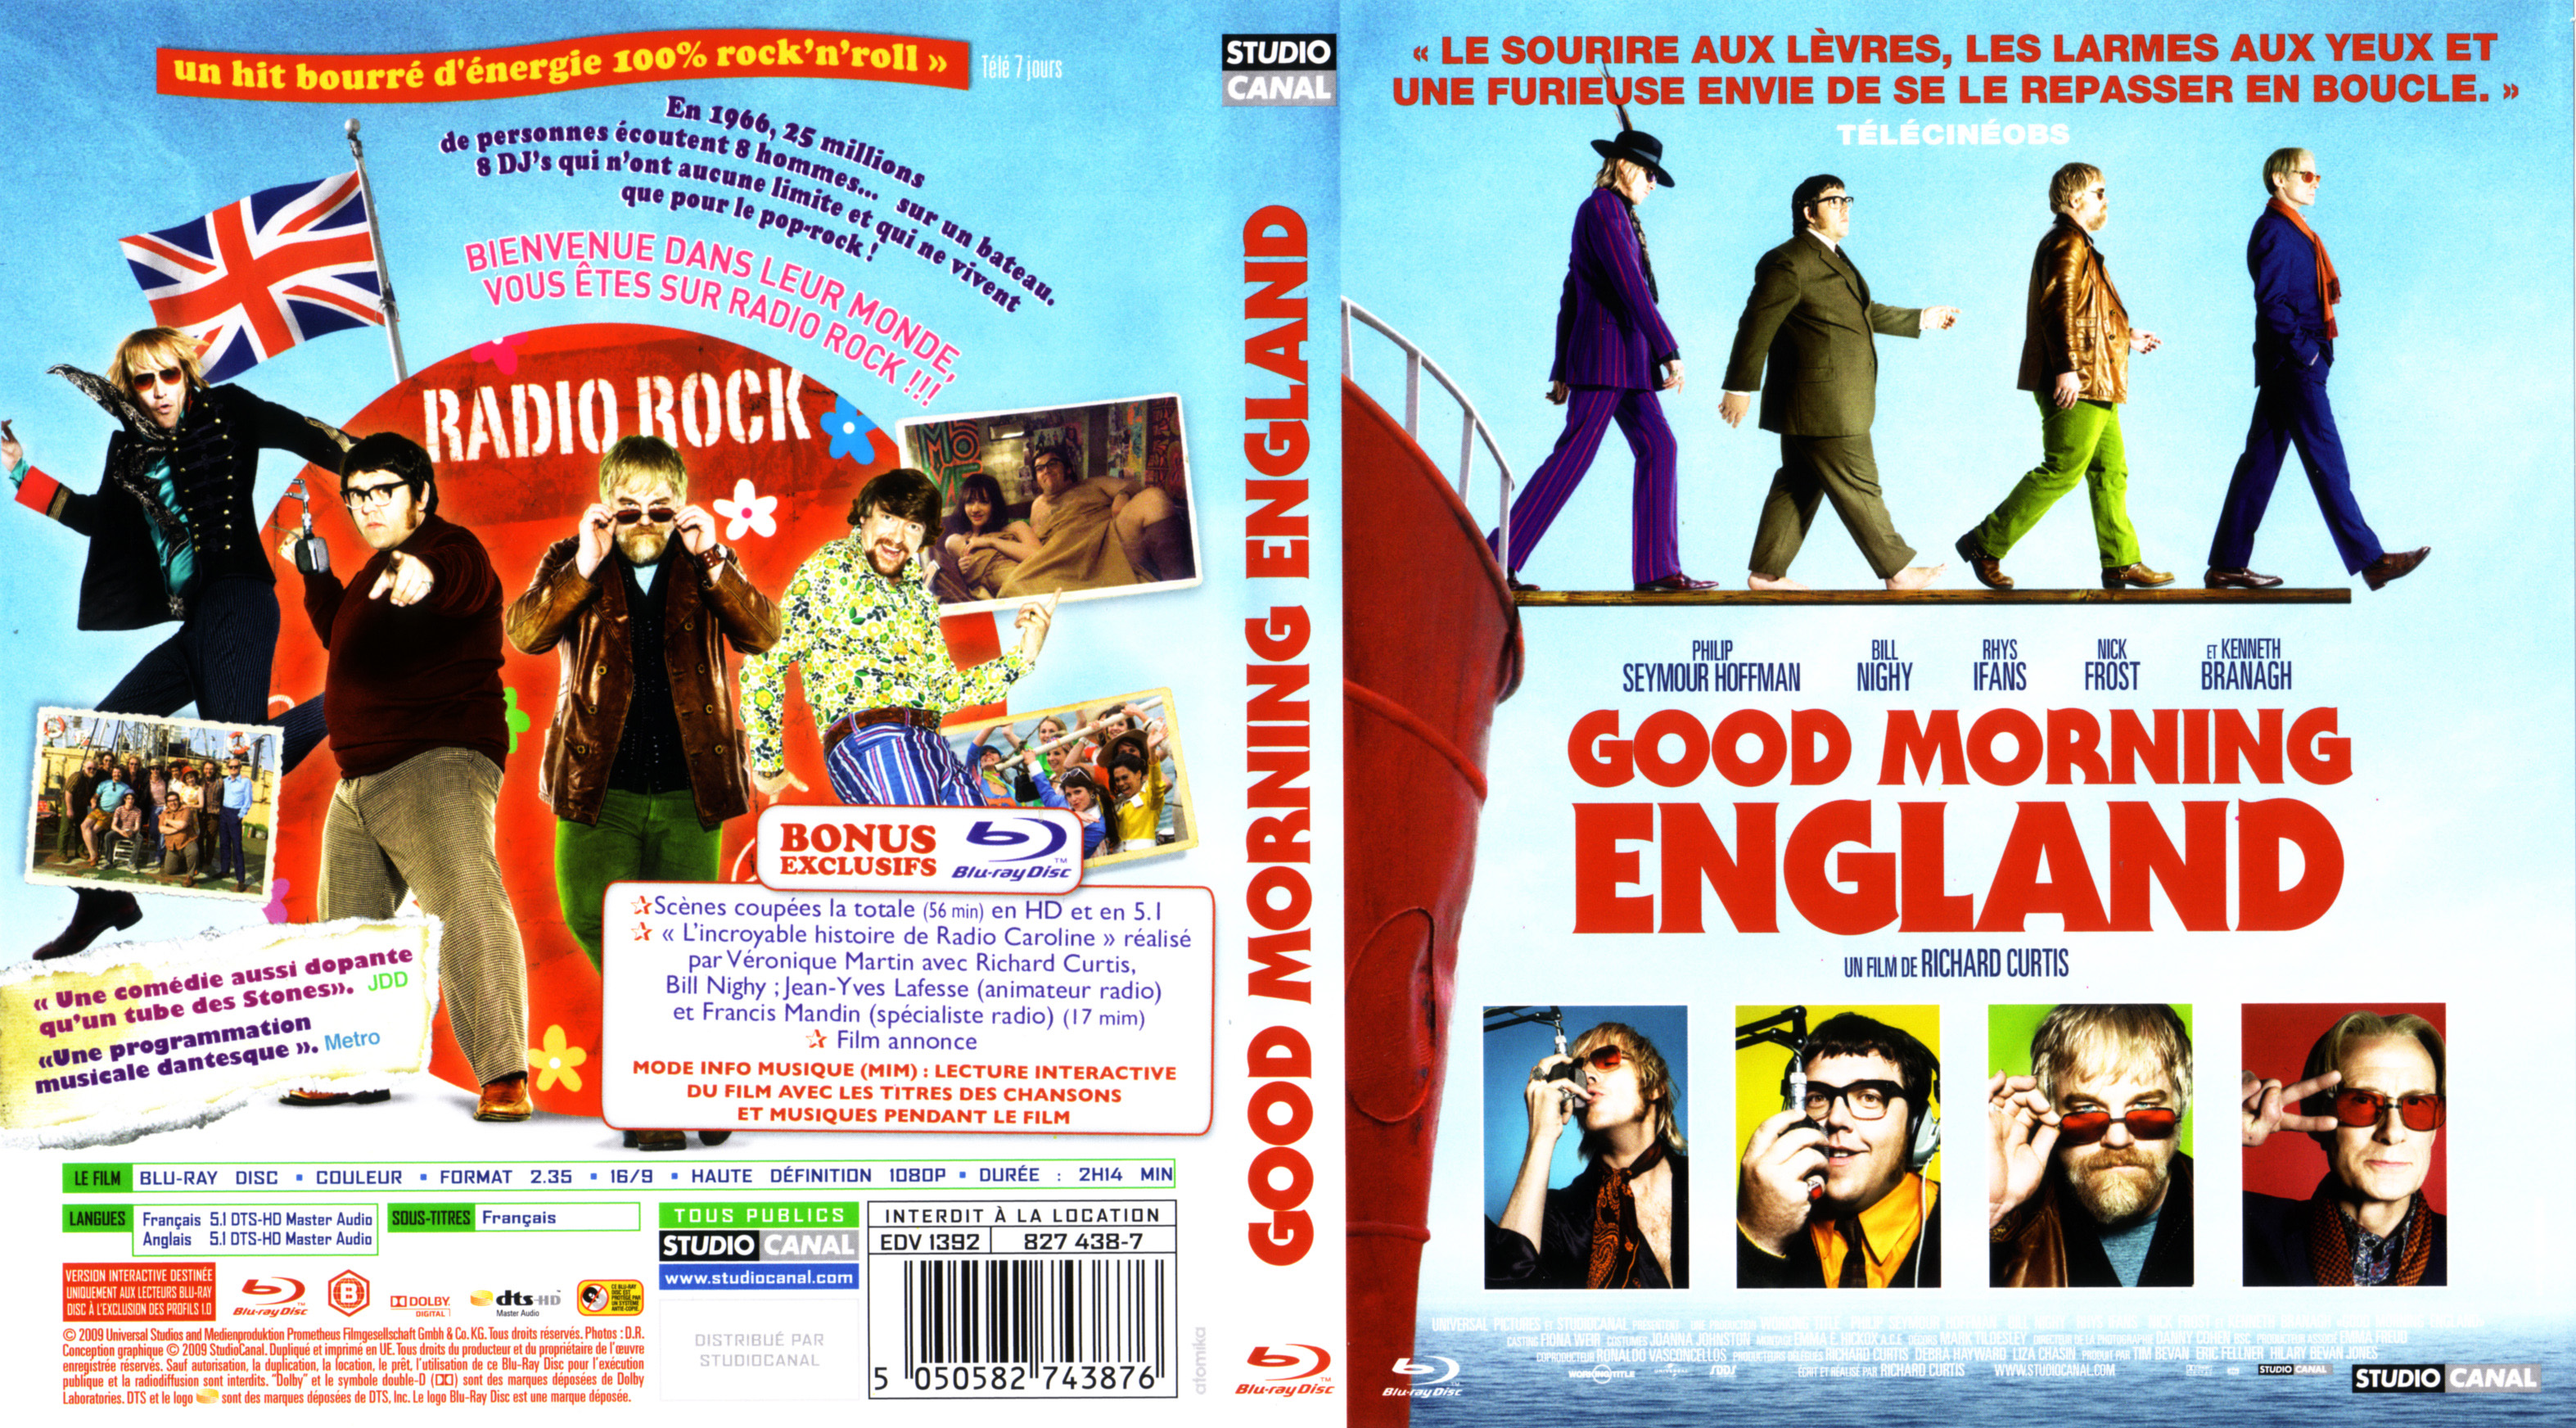 Jaquette DVD Good morning england (BLU-RAY) v2